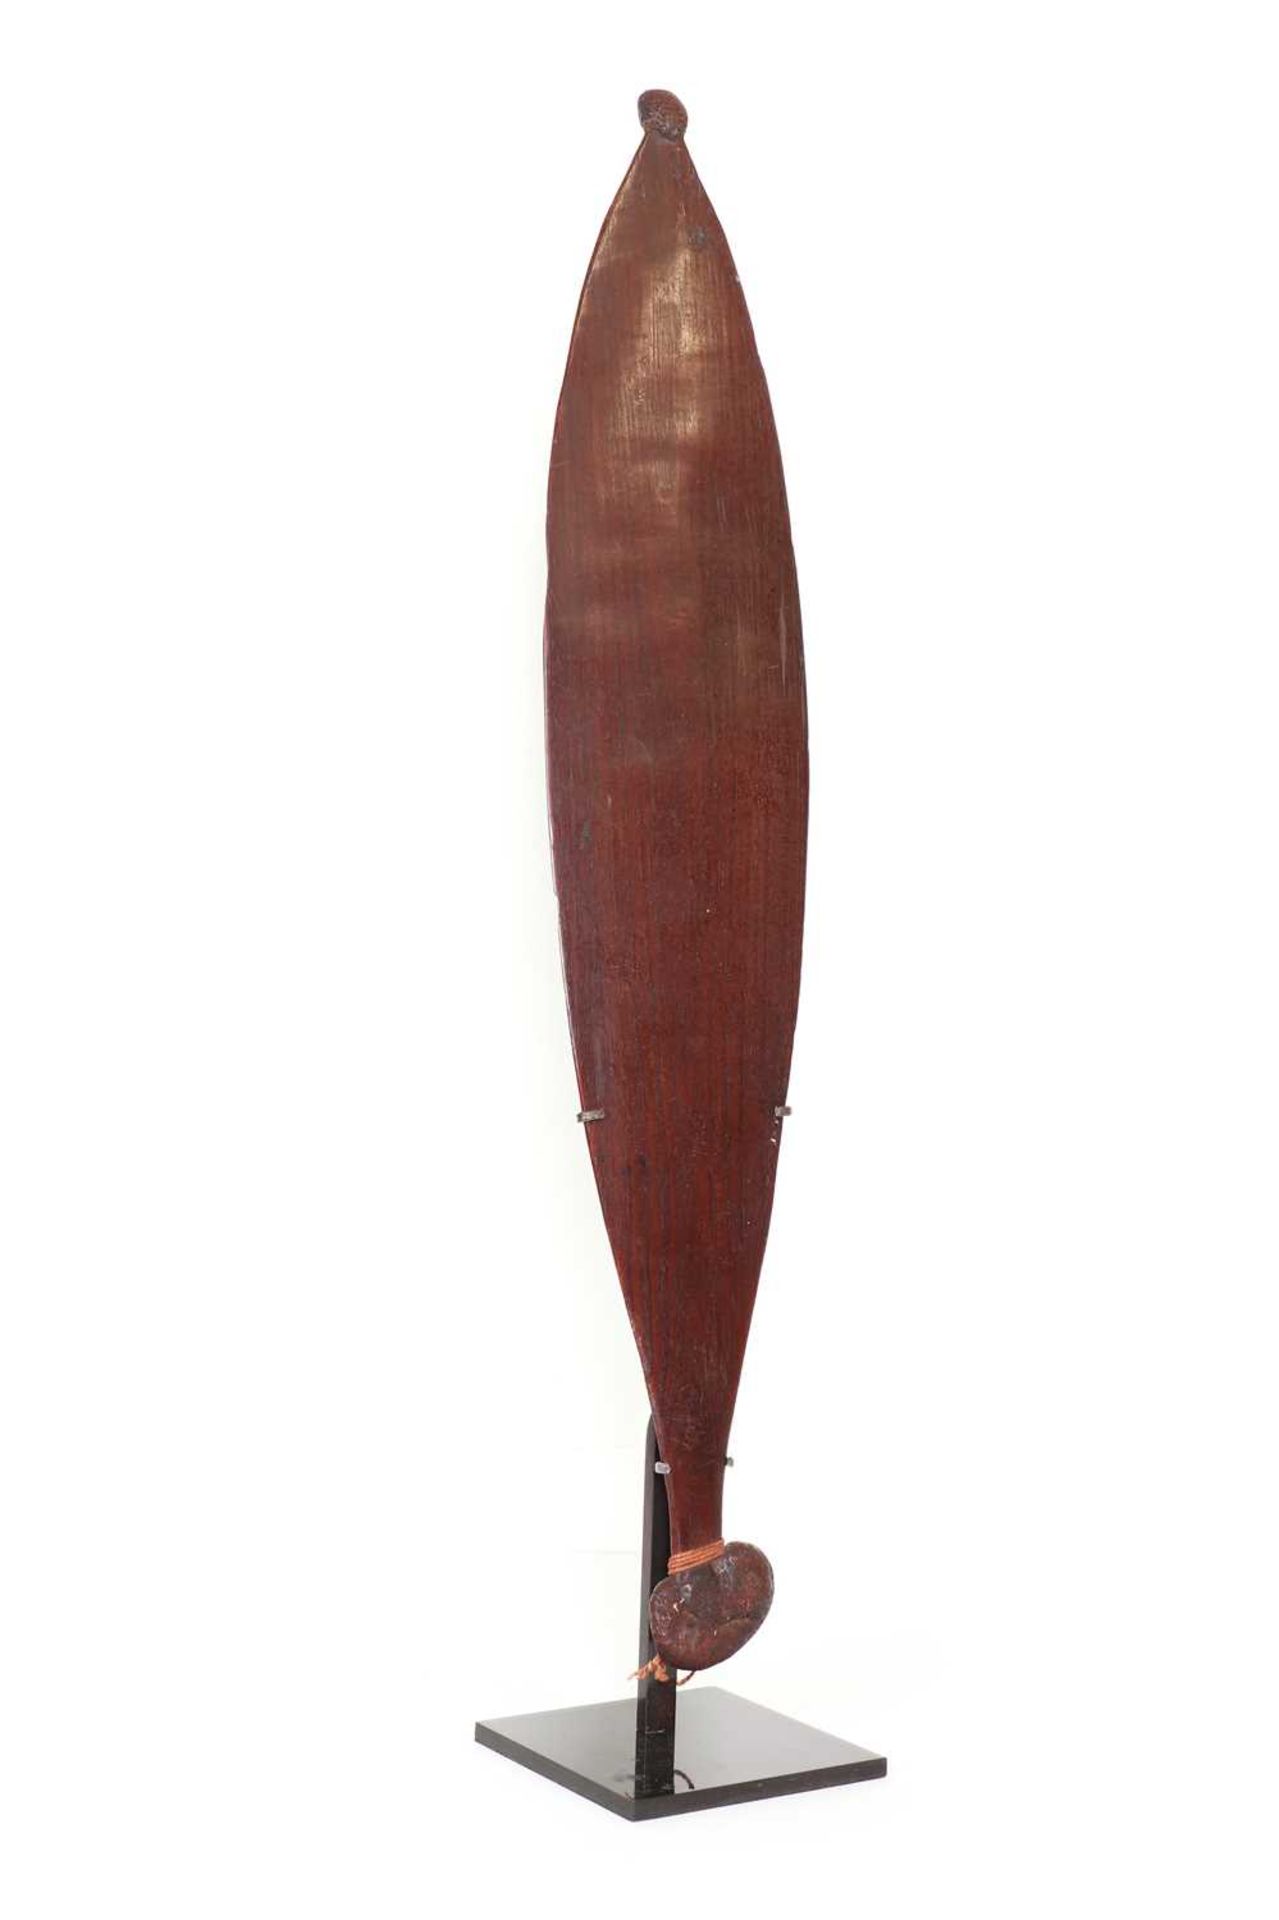 An Australian Aboriginal hardwood spear thrower or 'Meru',